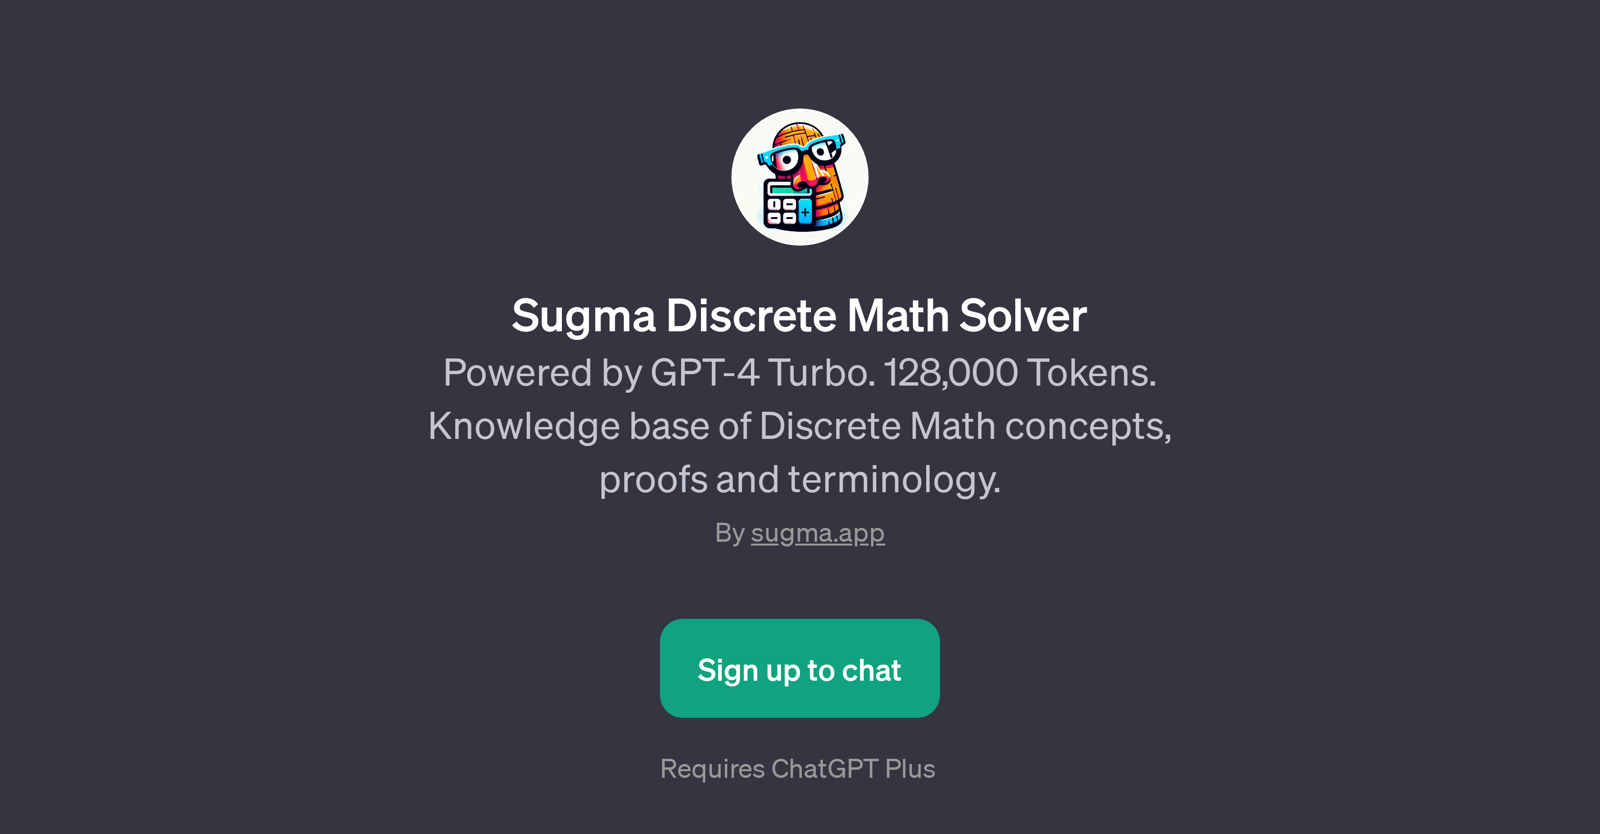 Sugma Discrete Math Solver website